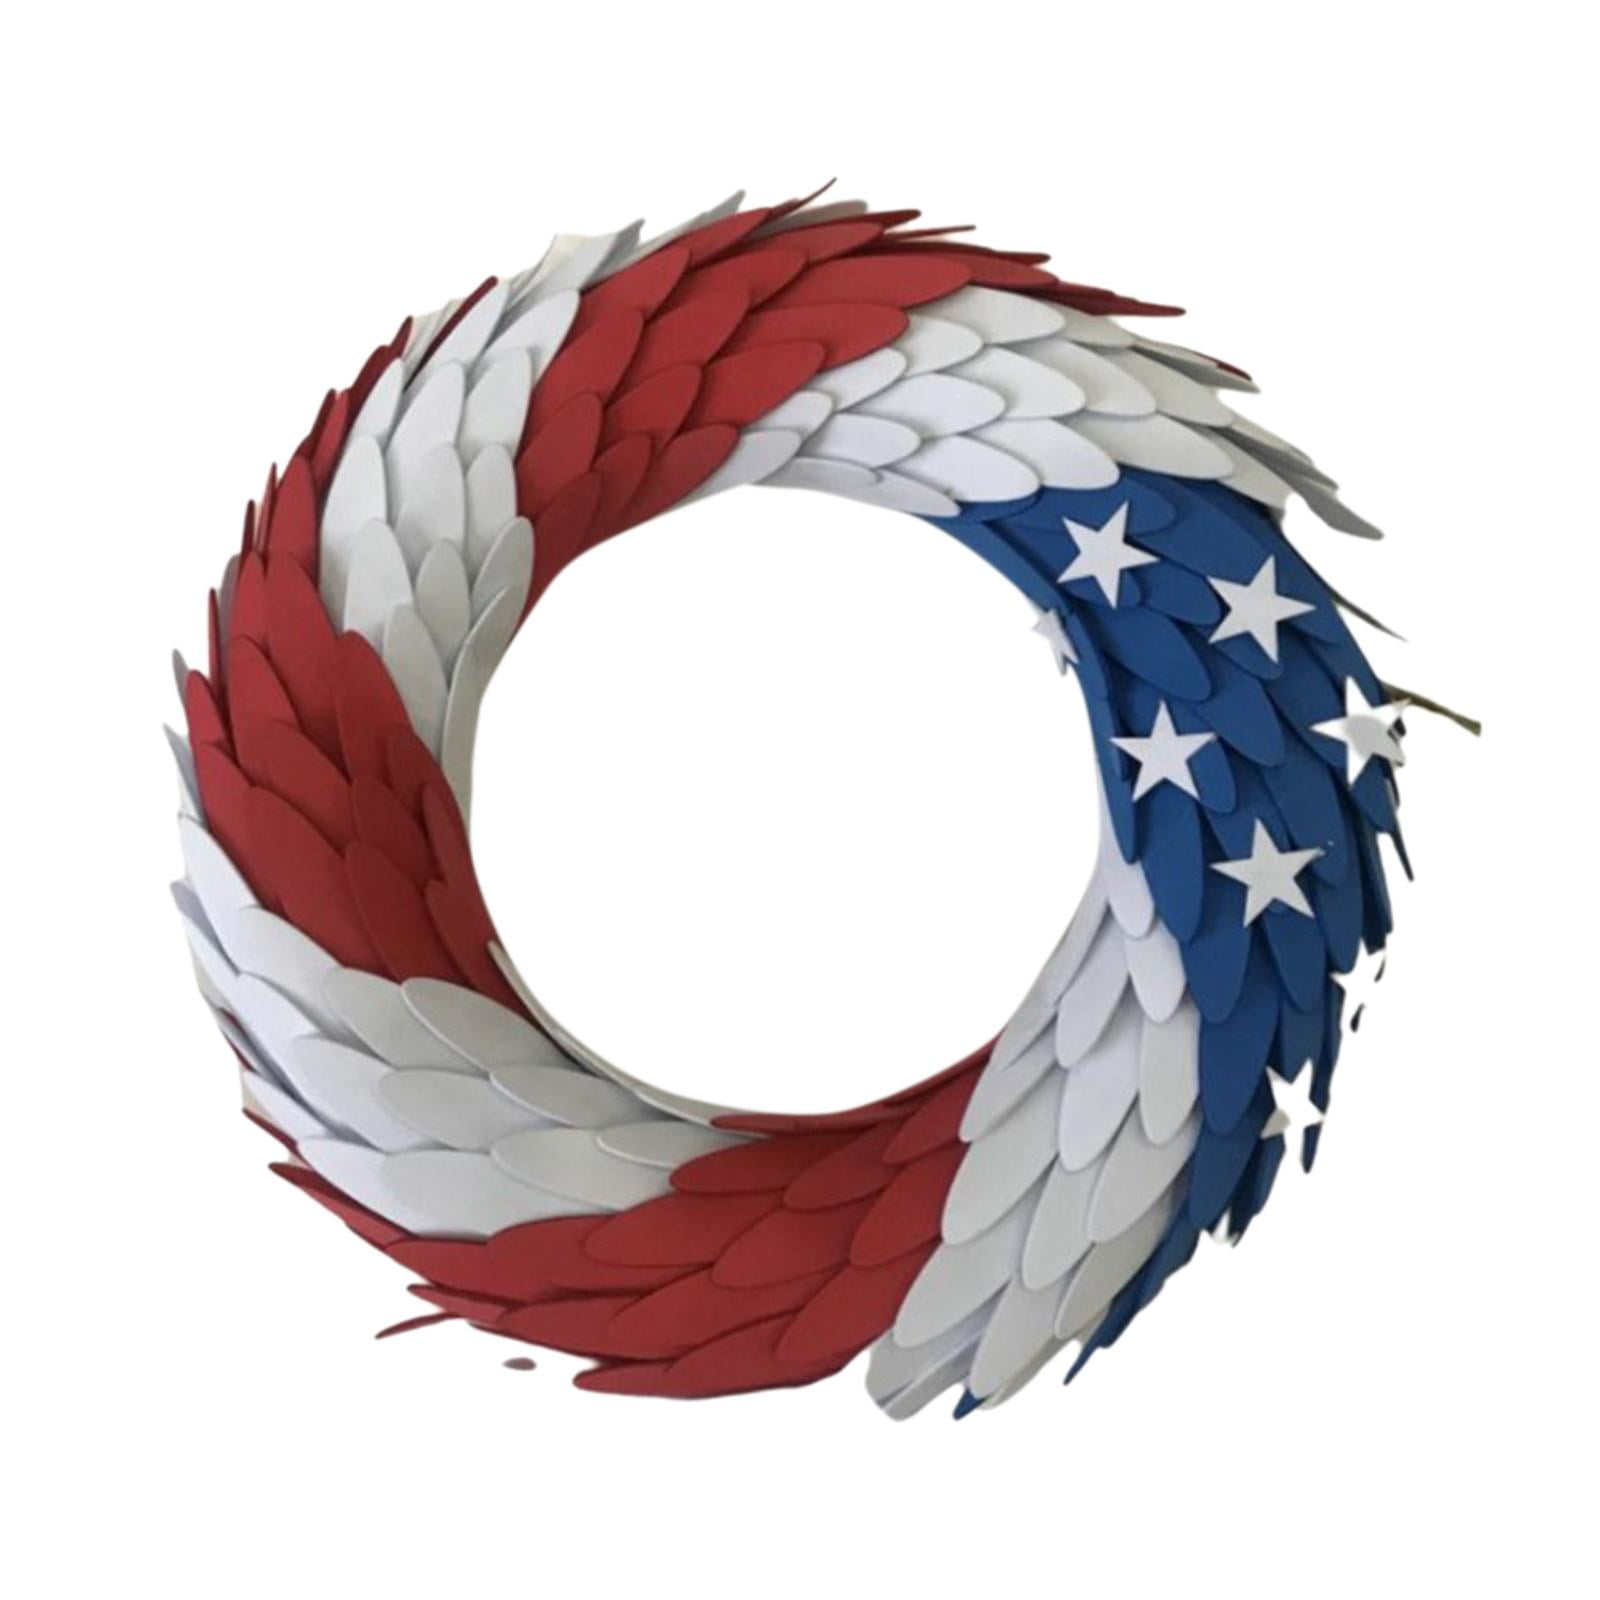 Details about   American Eagle Patriotic Wreath for Door Memorial Day Festival Garland Decor